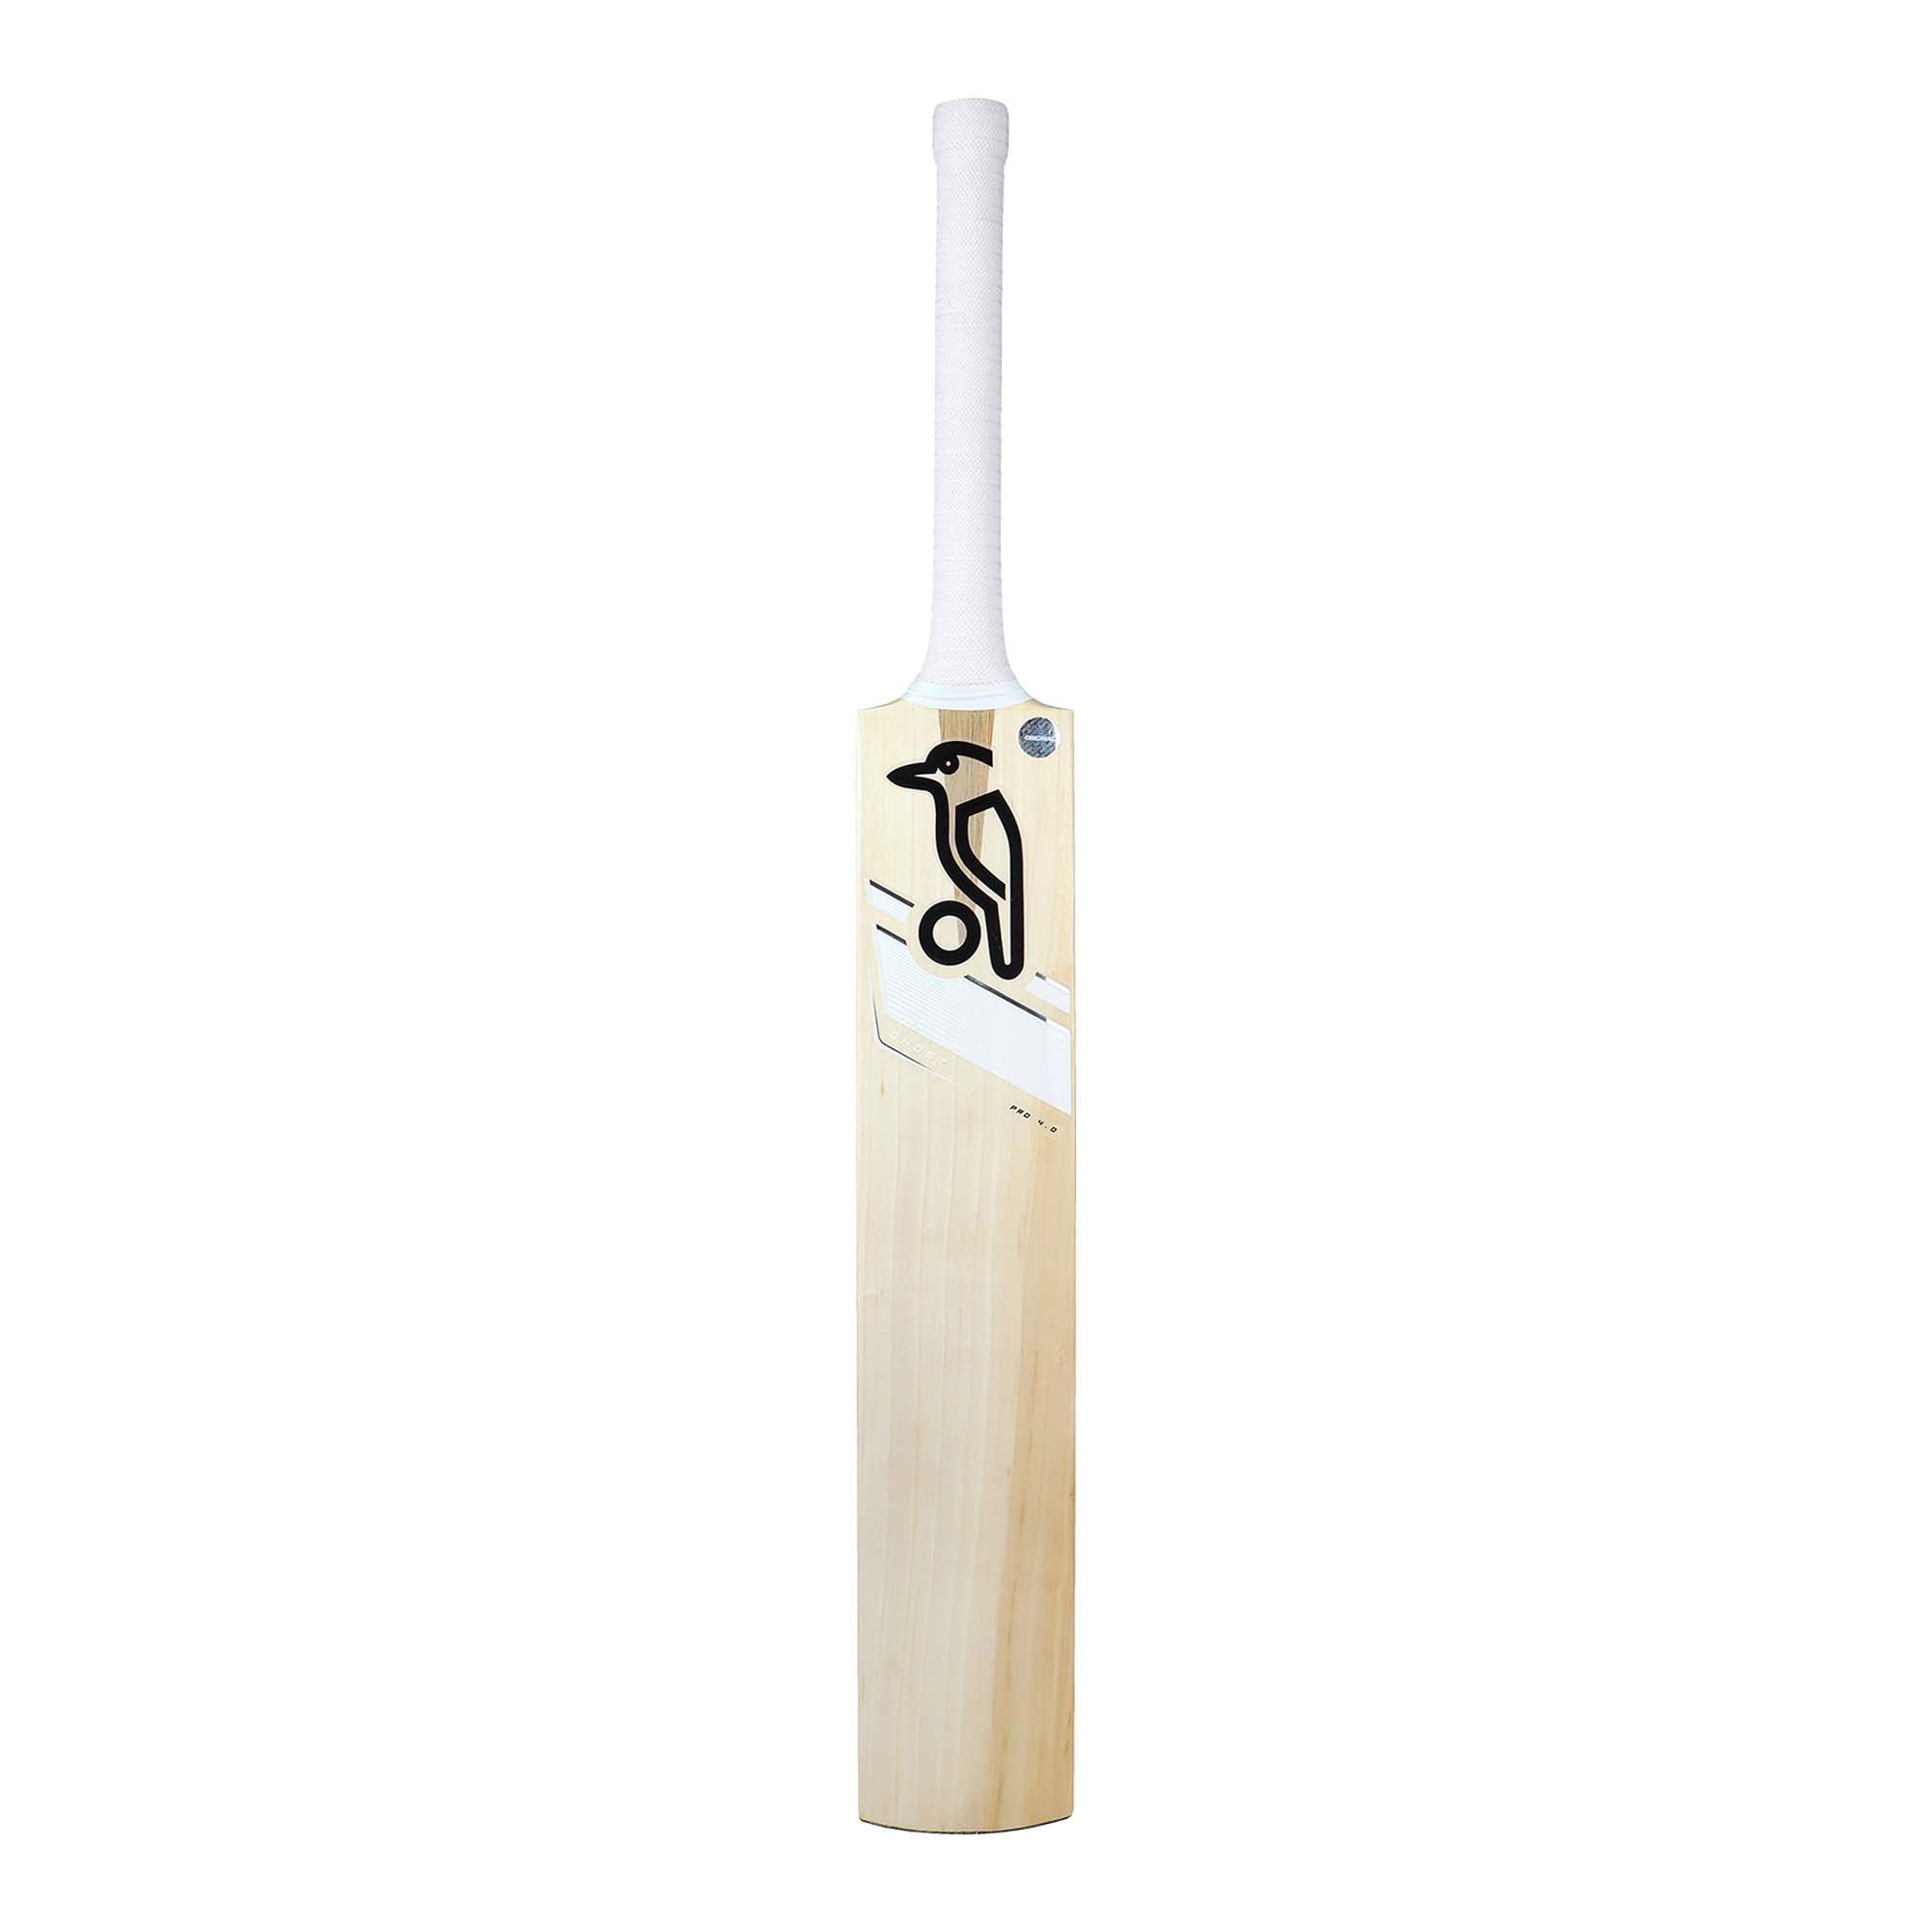 Kookaburra Ghost Pro 4.0 English Willow Junior Cricket Bat